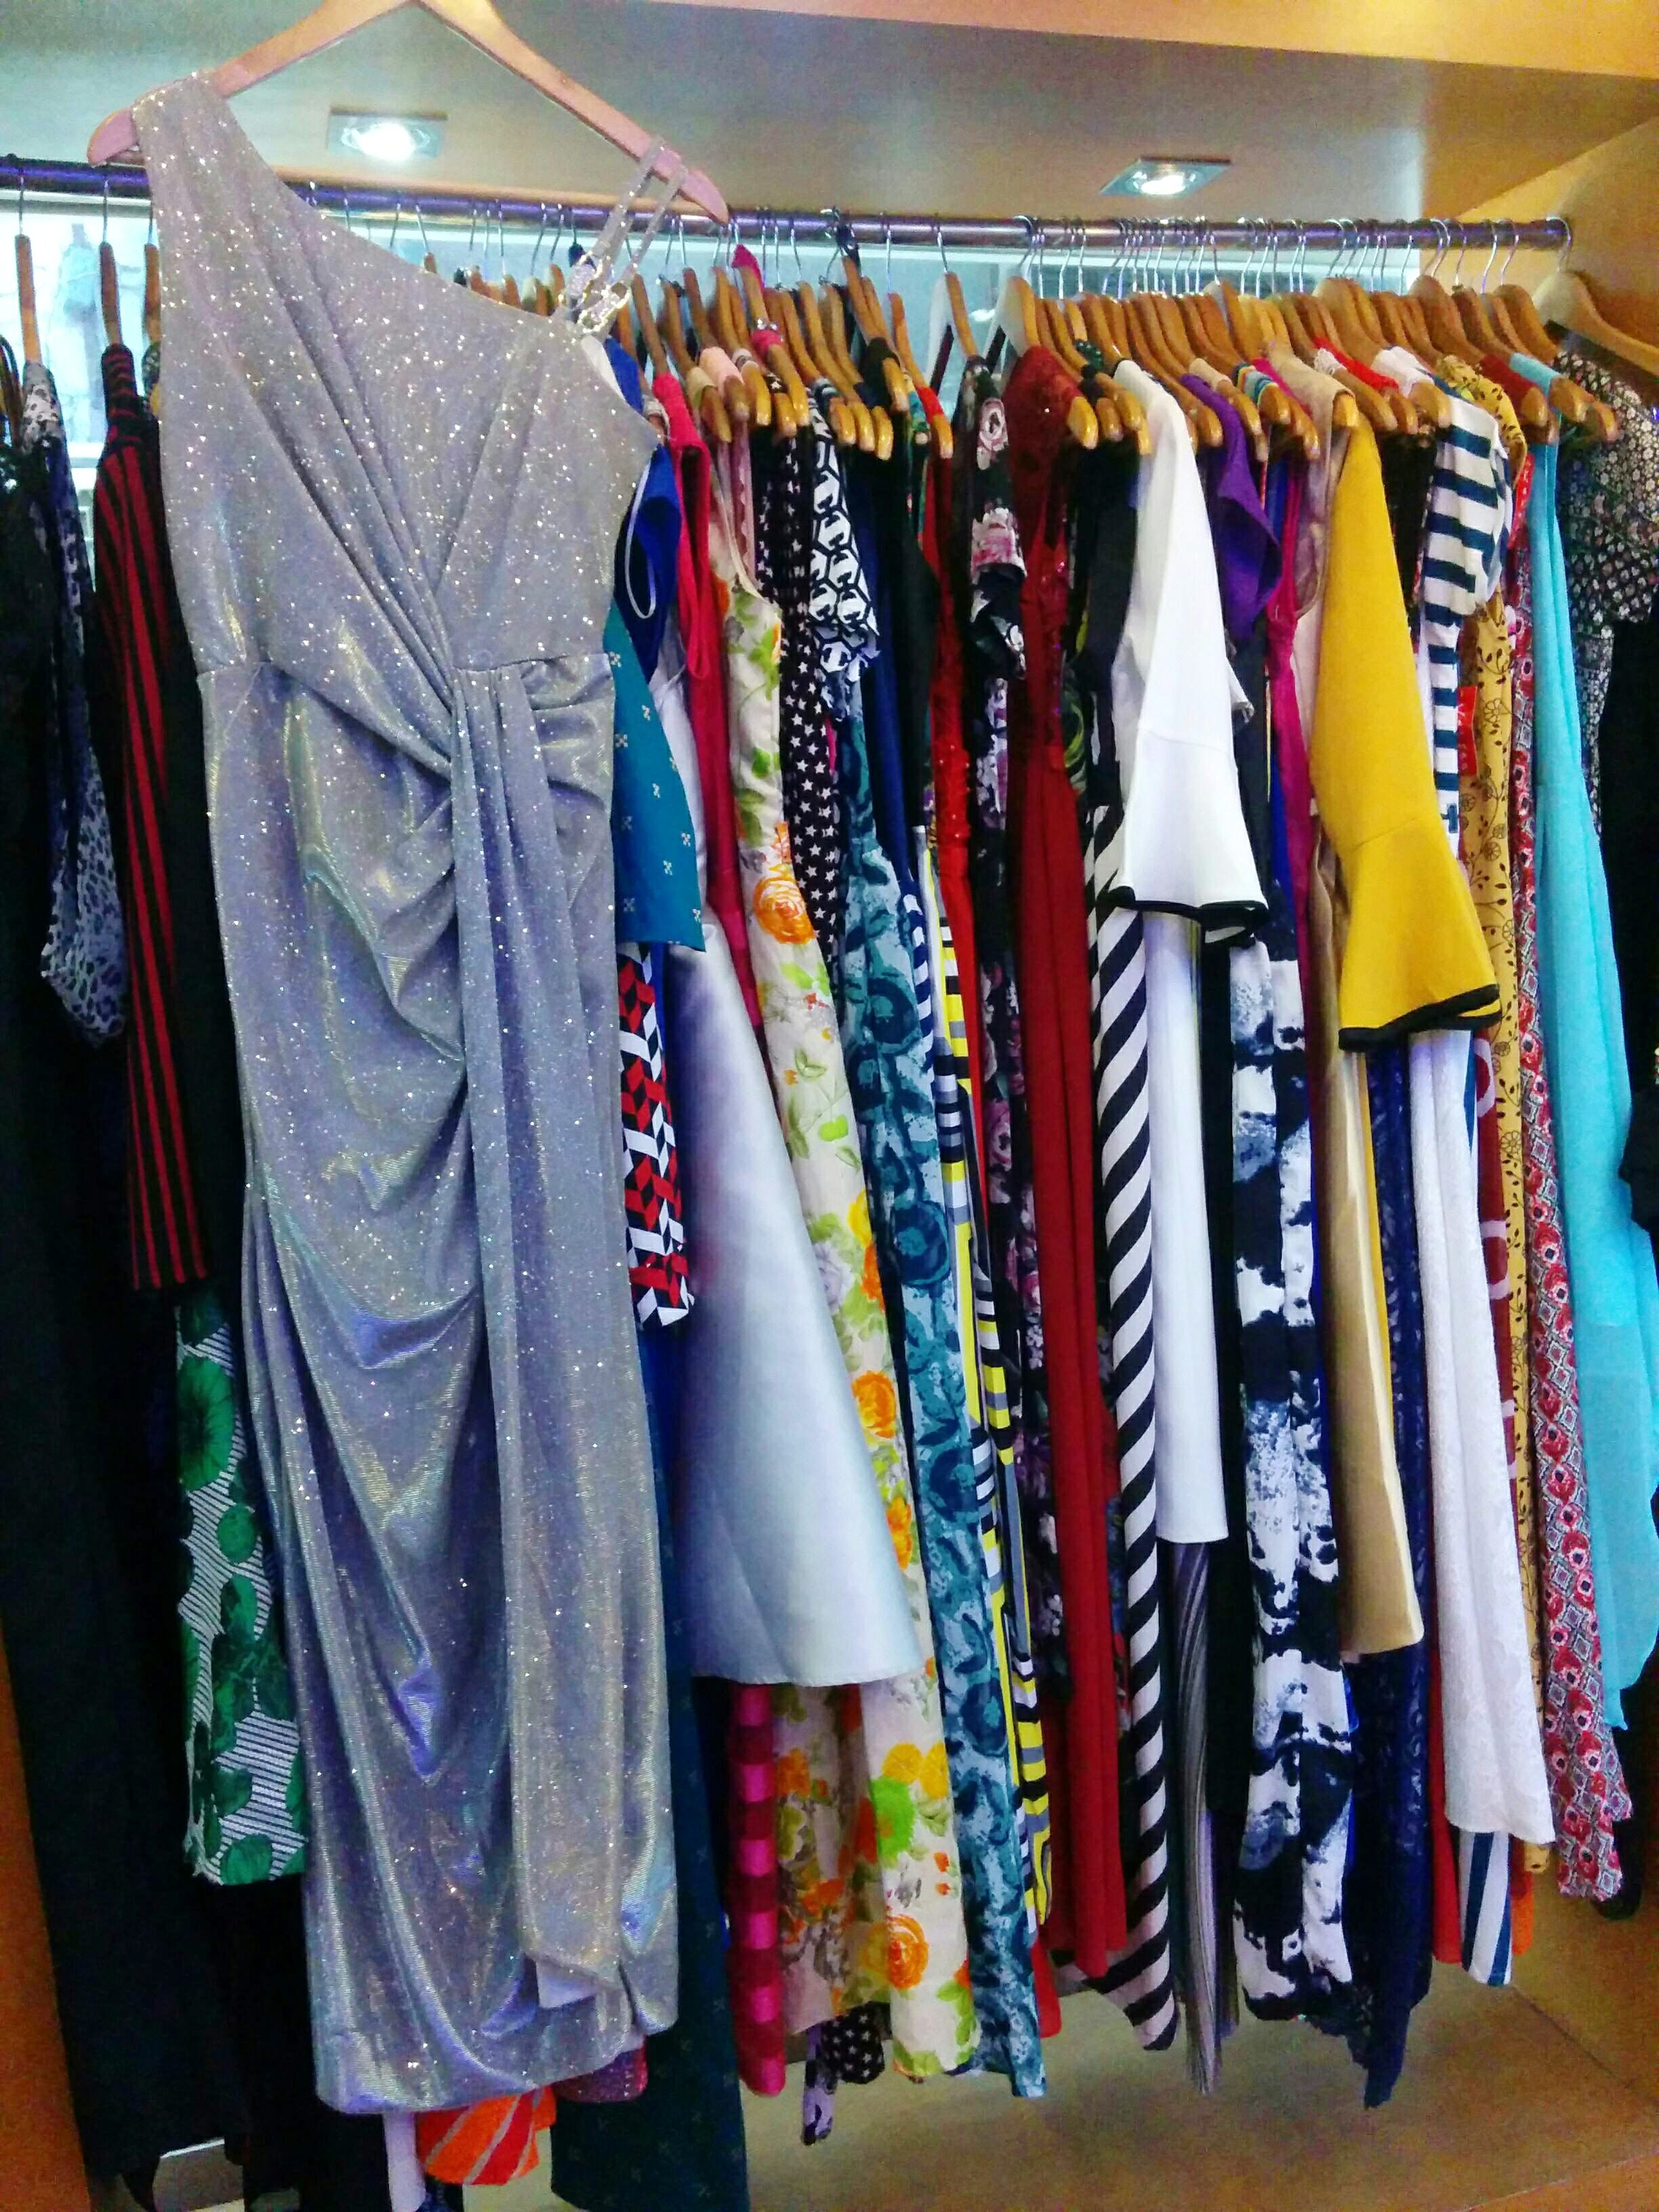 Clothing,Room,Closet,Boutique,Clothes hanger,Textile,Dress,Furniture,Wardrobe